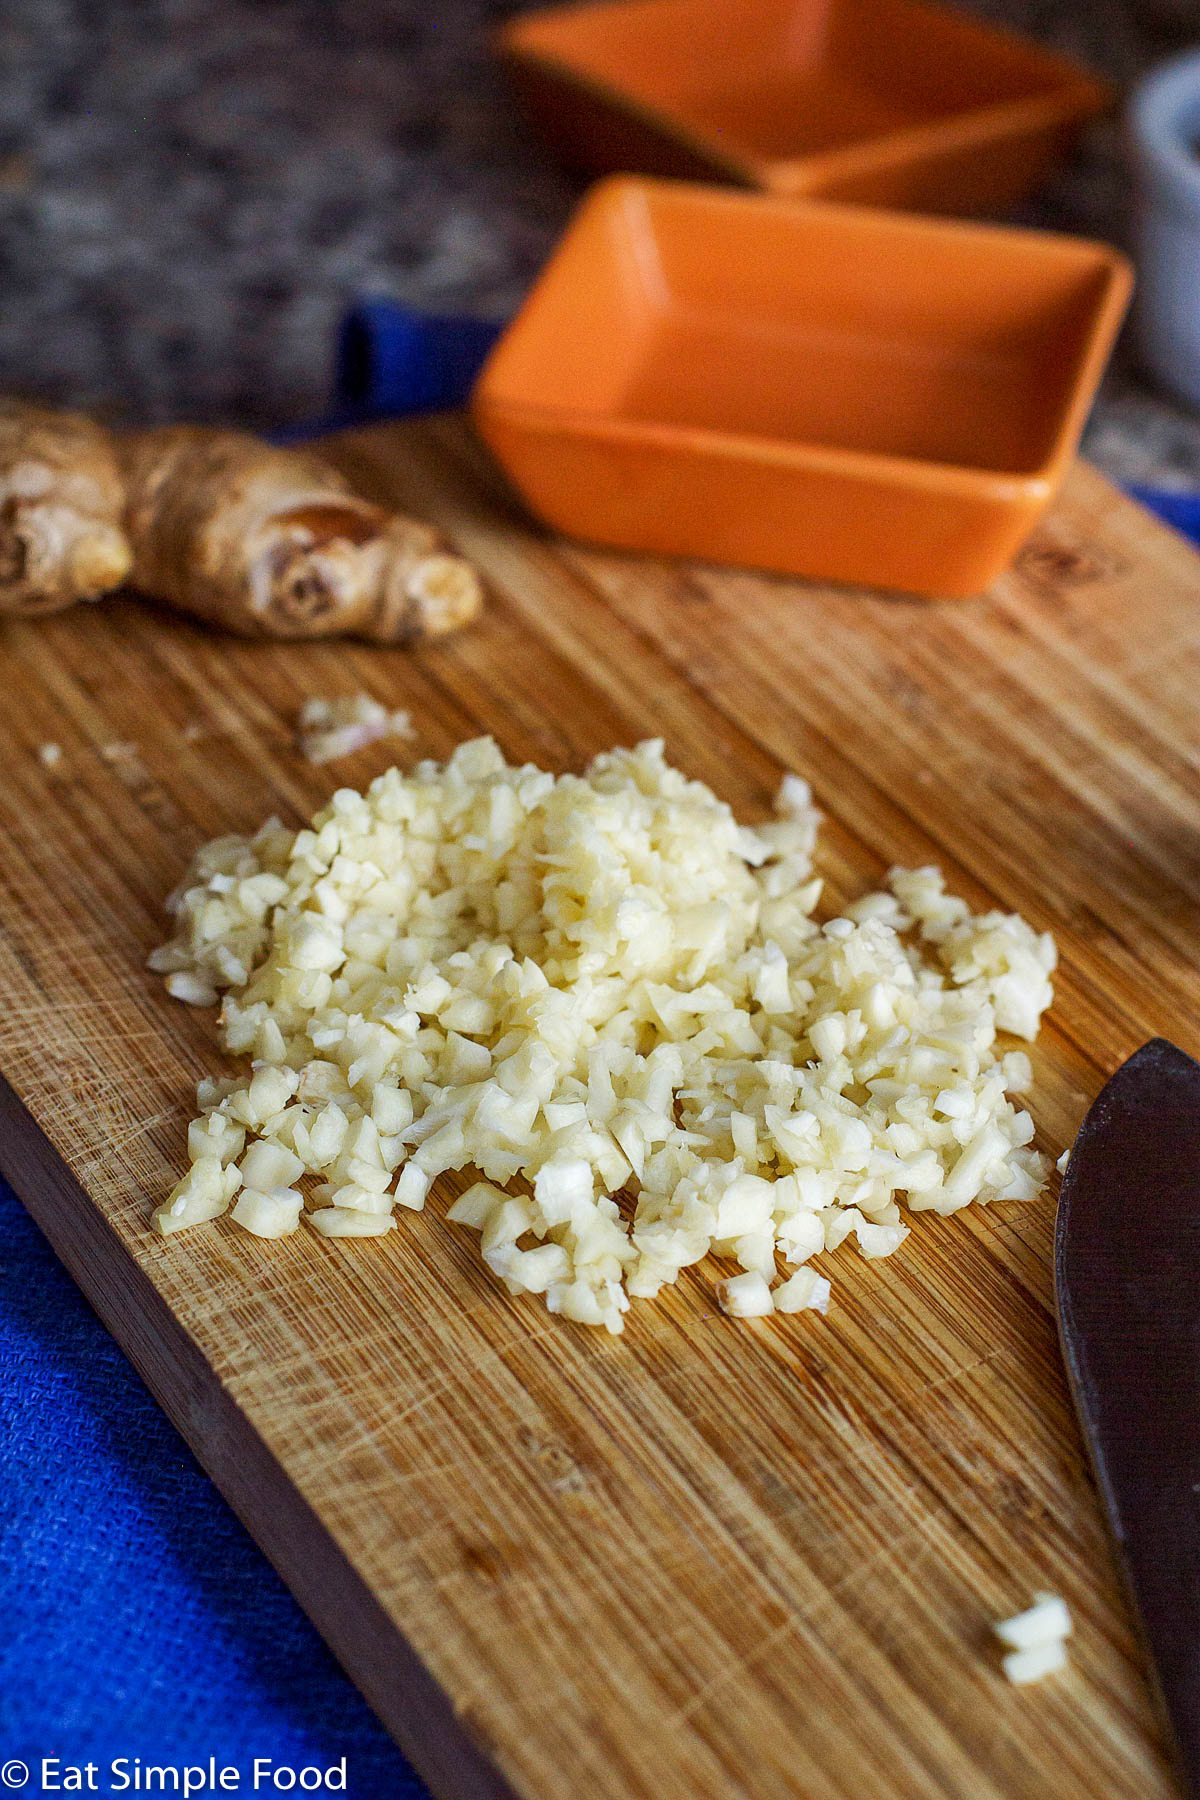 https://eatsimplefood.com/wp-content/uploads/2020/04/Mise-en-place-chopped-garlic-Recipe-EatSimpleFood.com_.jpg